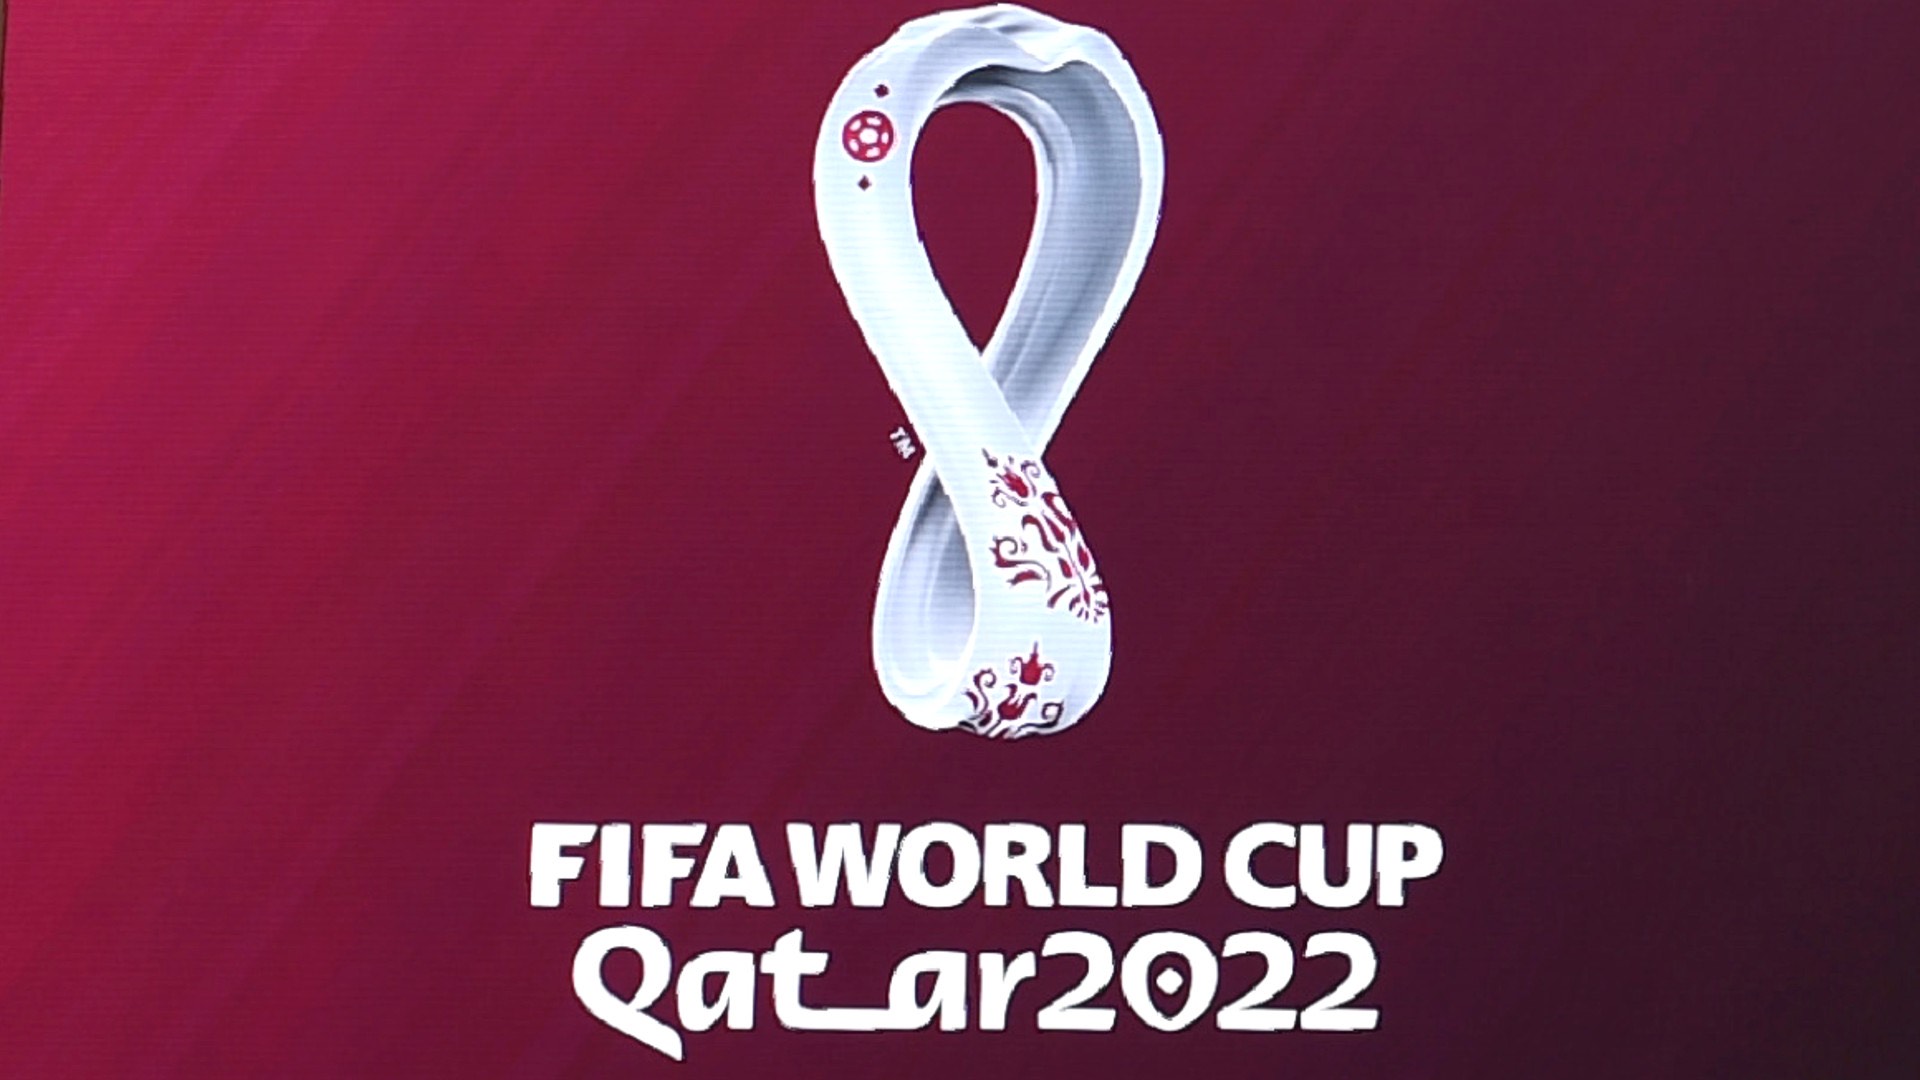 Fifa world cup Qatar 2022 logo.